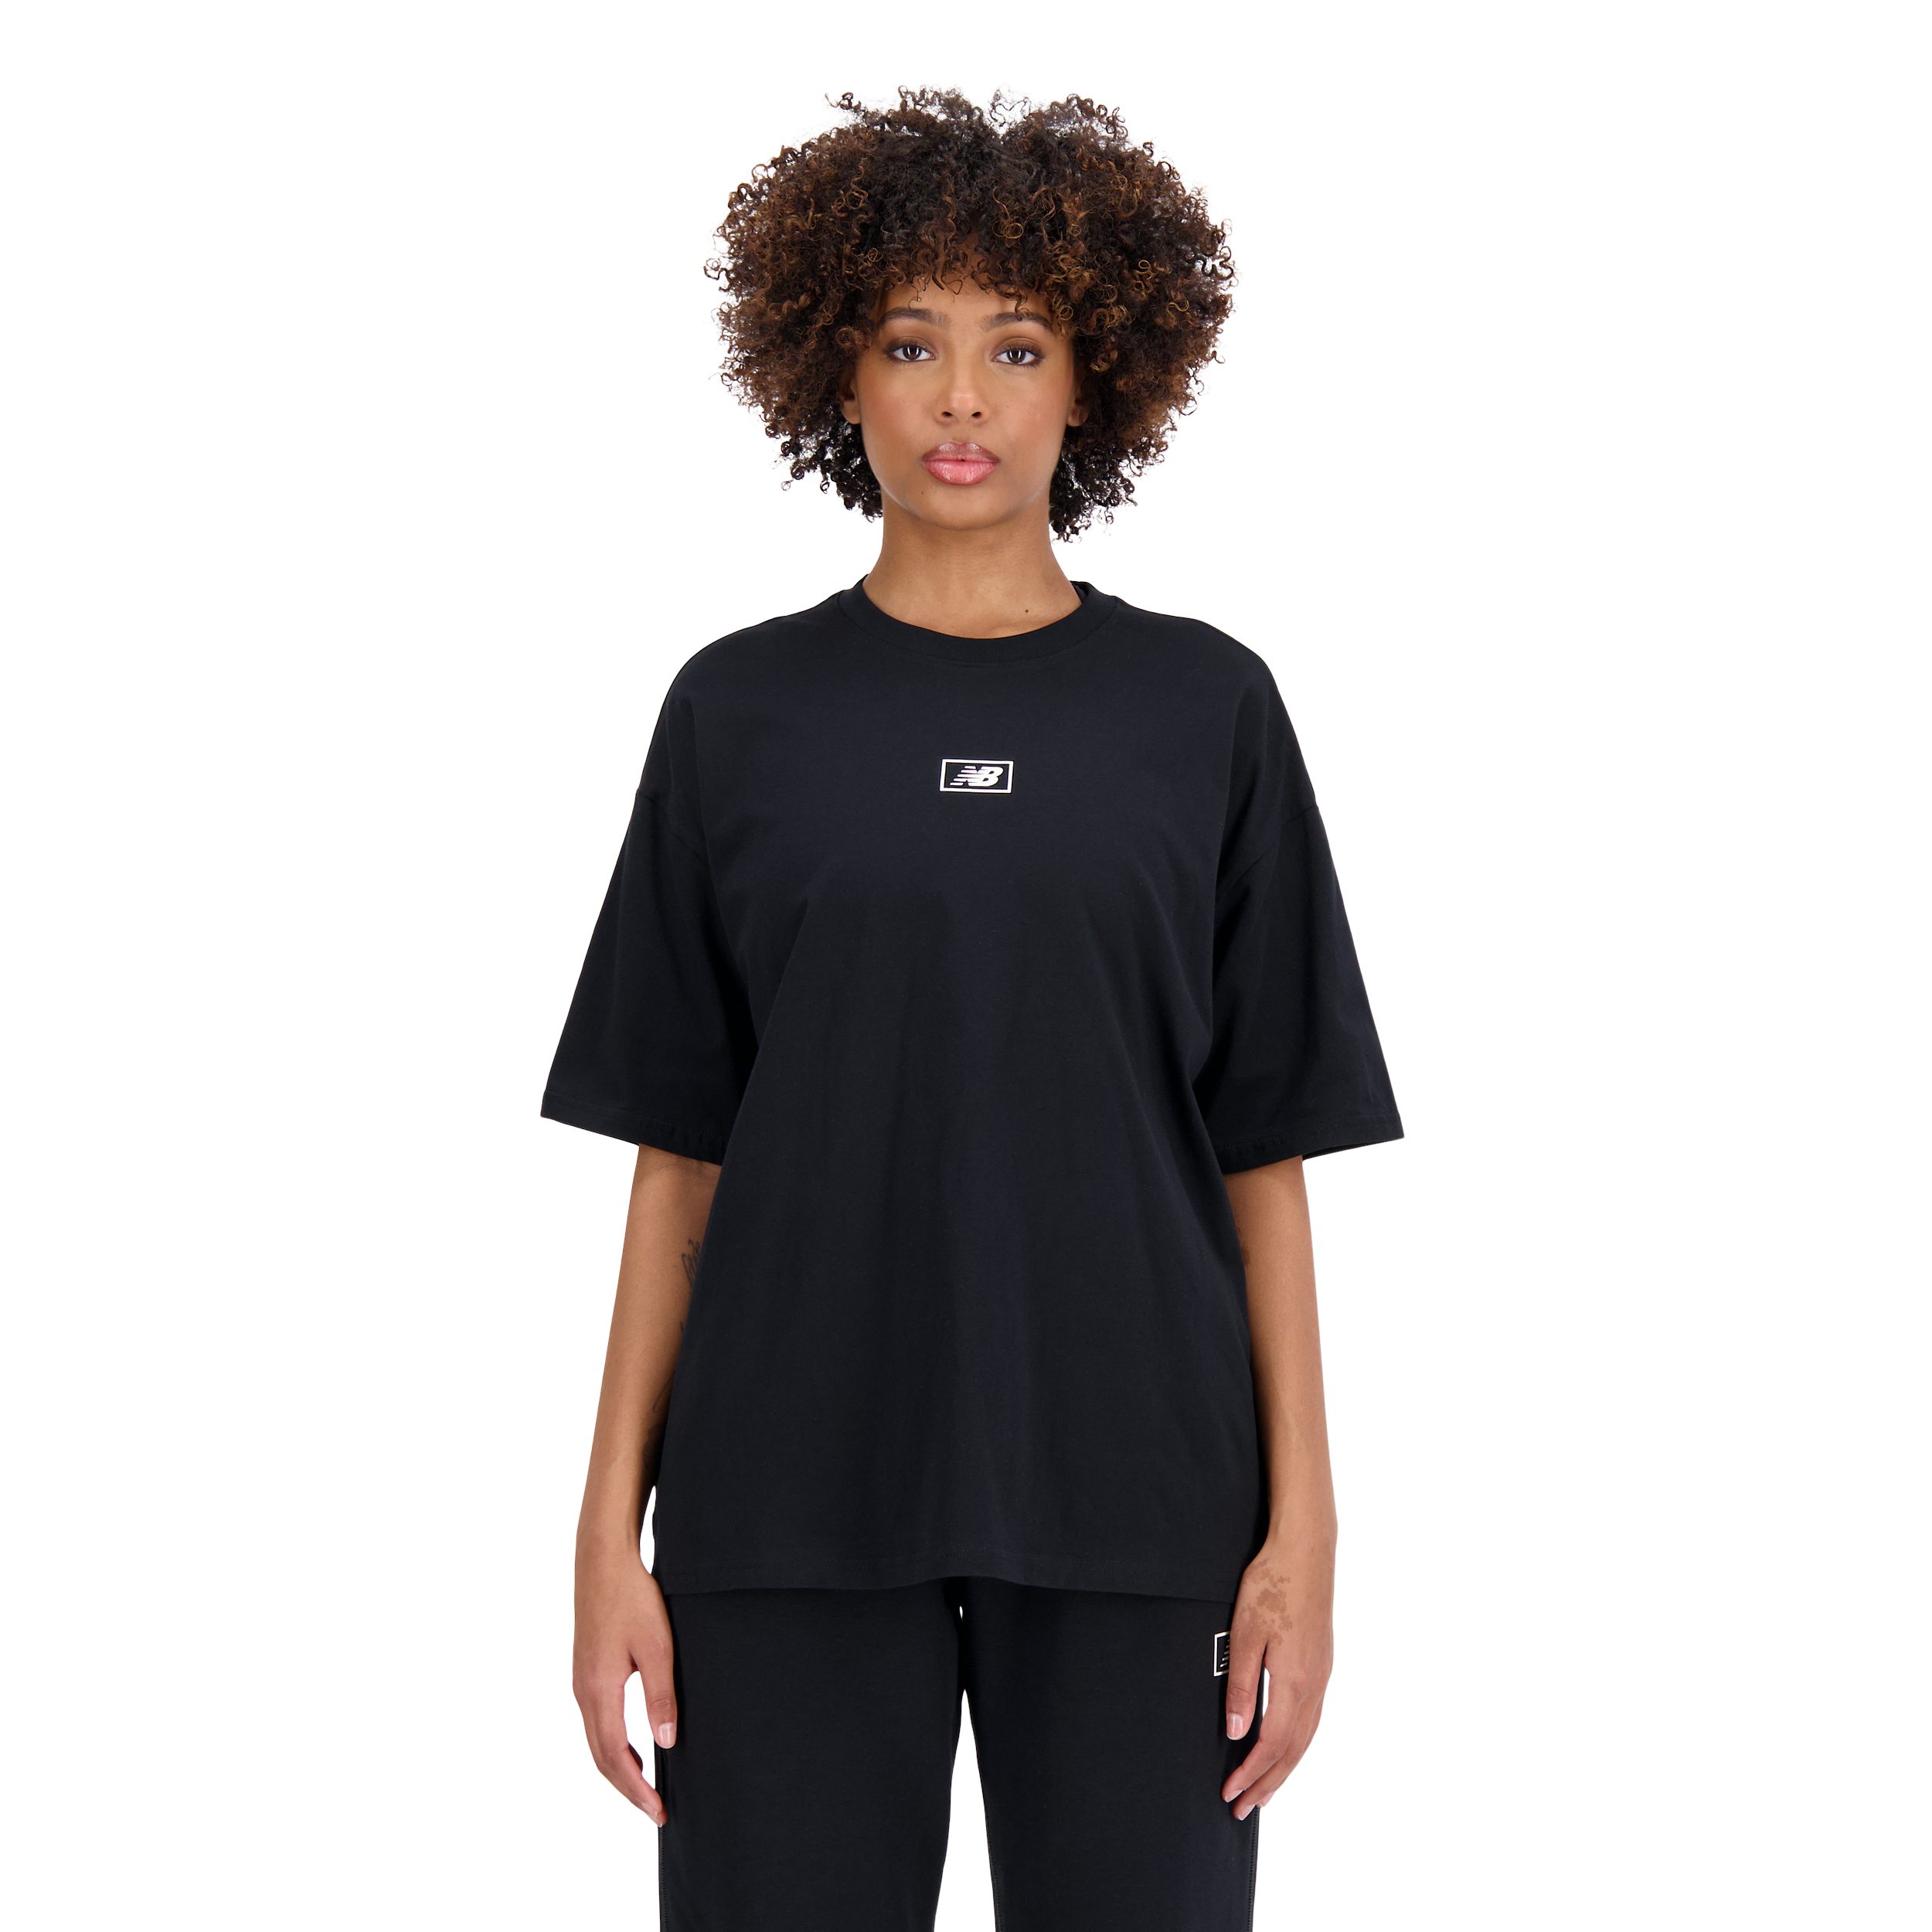 New Balance T-Shirt black (001) | Sport-T-Shirts